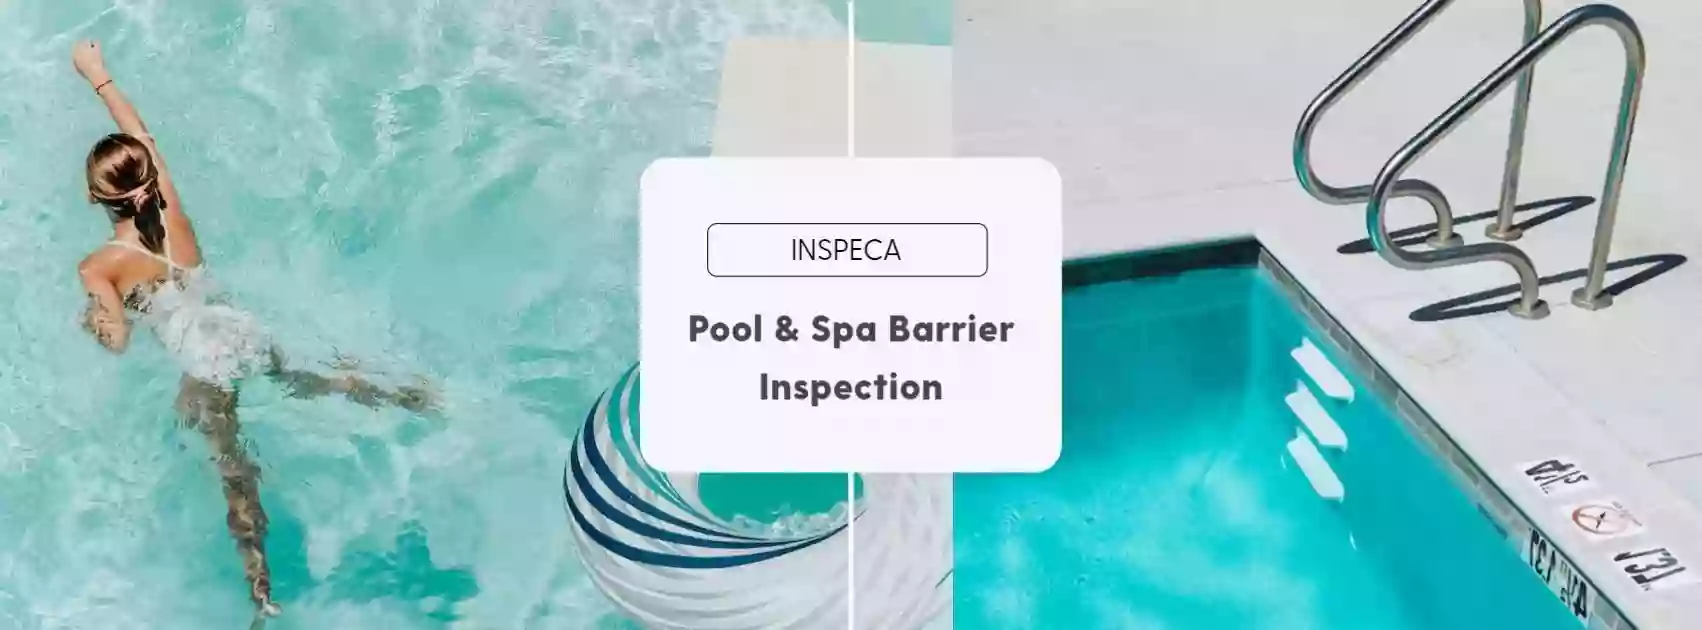 Inspeca -Pool & Spa Barrier Inspection